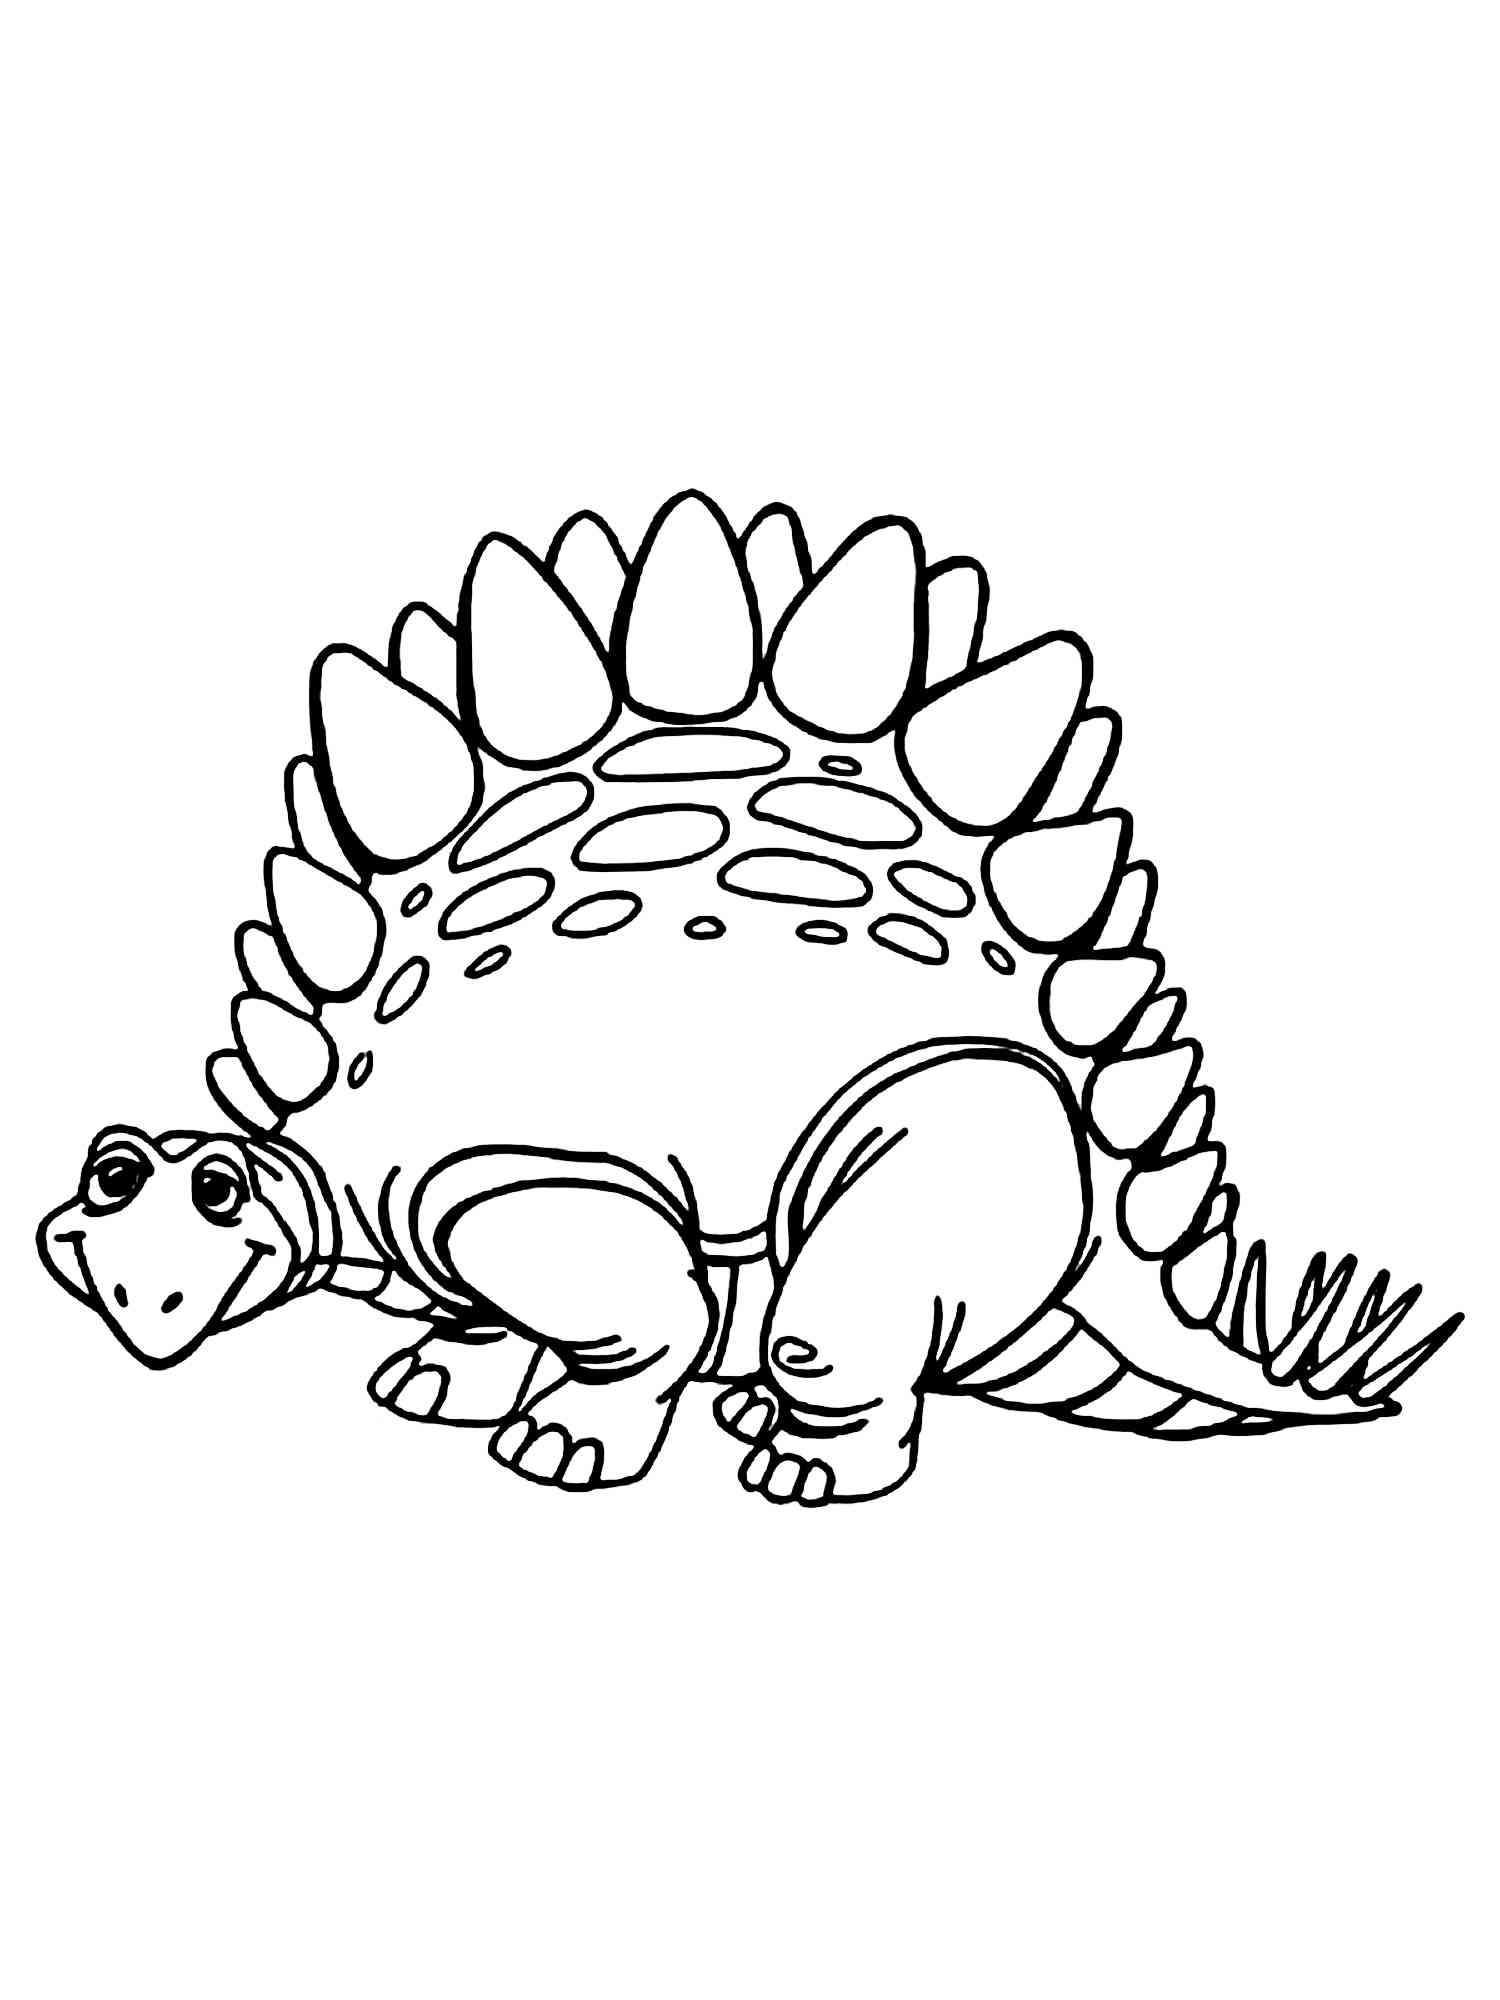 Fat Stegosaurus coloring page